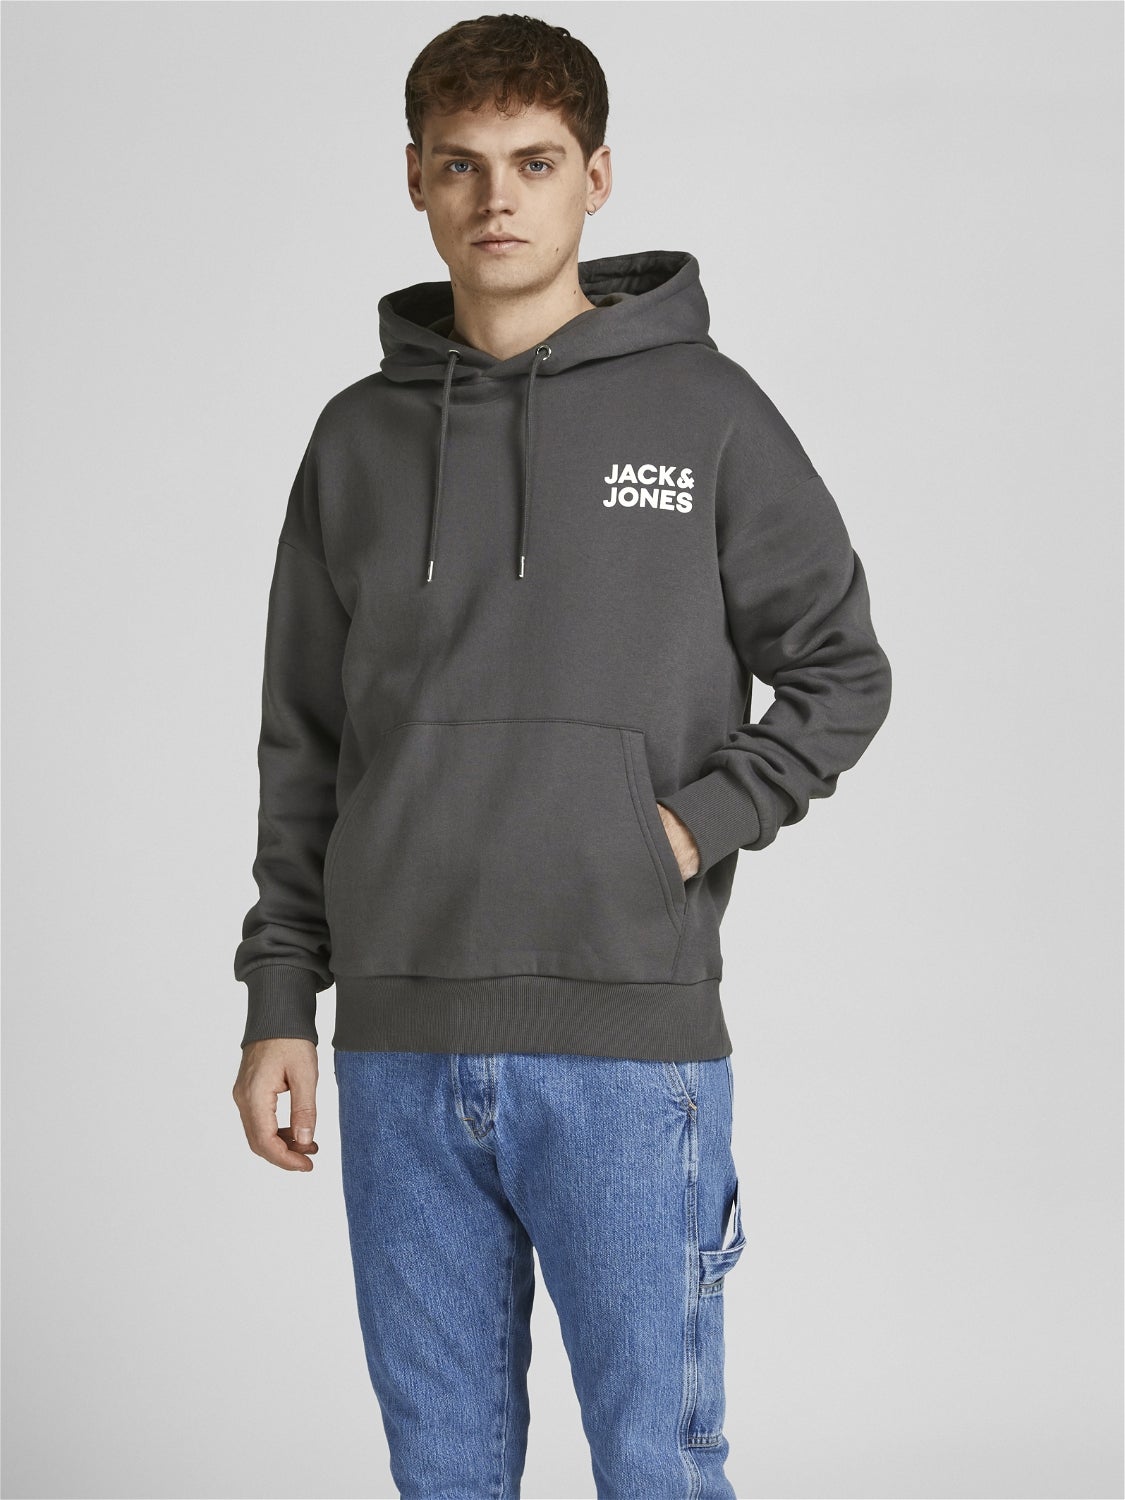 Navy Blue XL discount 56% MEN FASHION Jumpers & Sweatshirts Hoodie Jack & Jones sweatshirt 